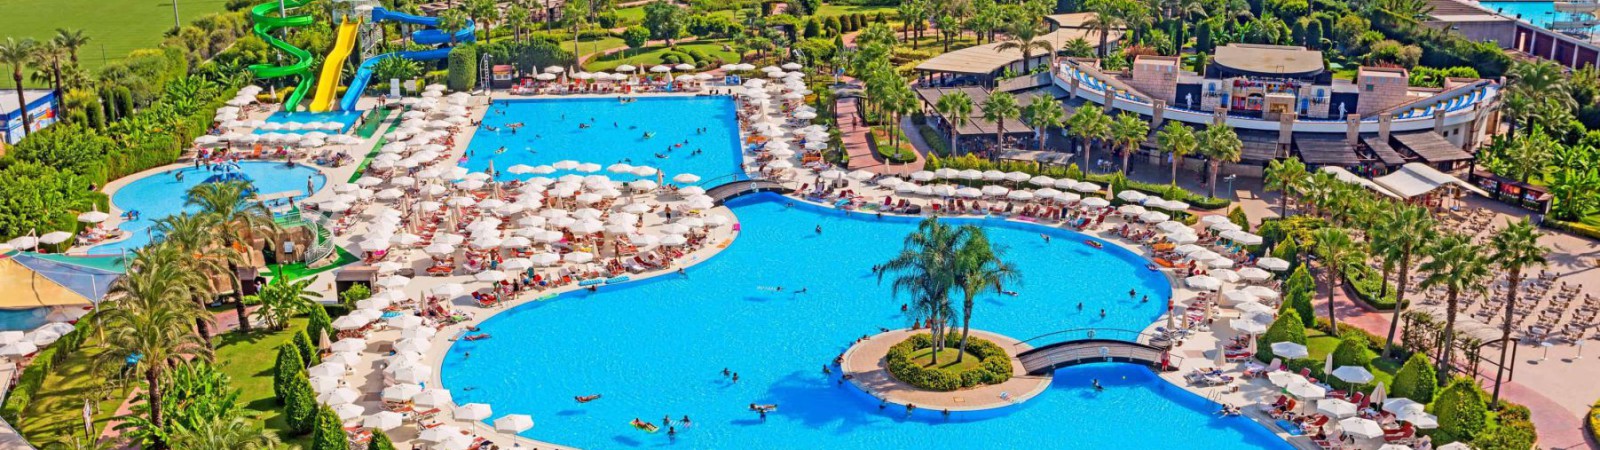 zwembad hotel miracle resort